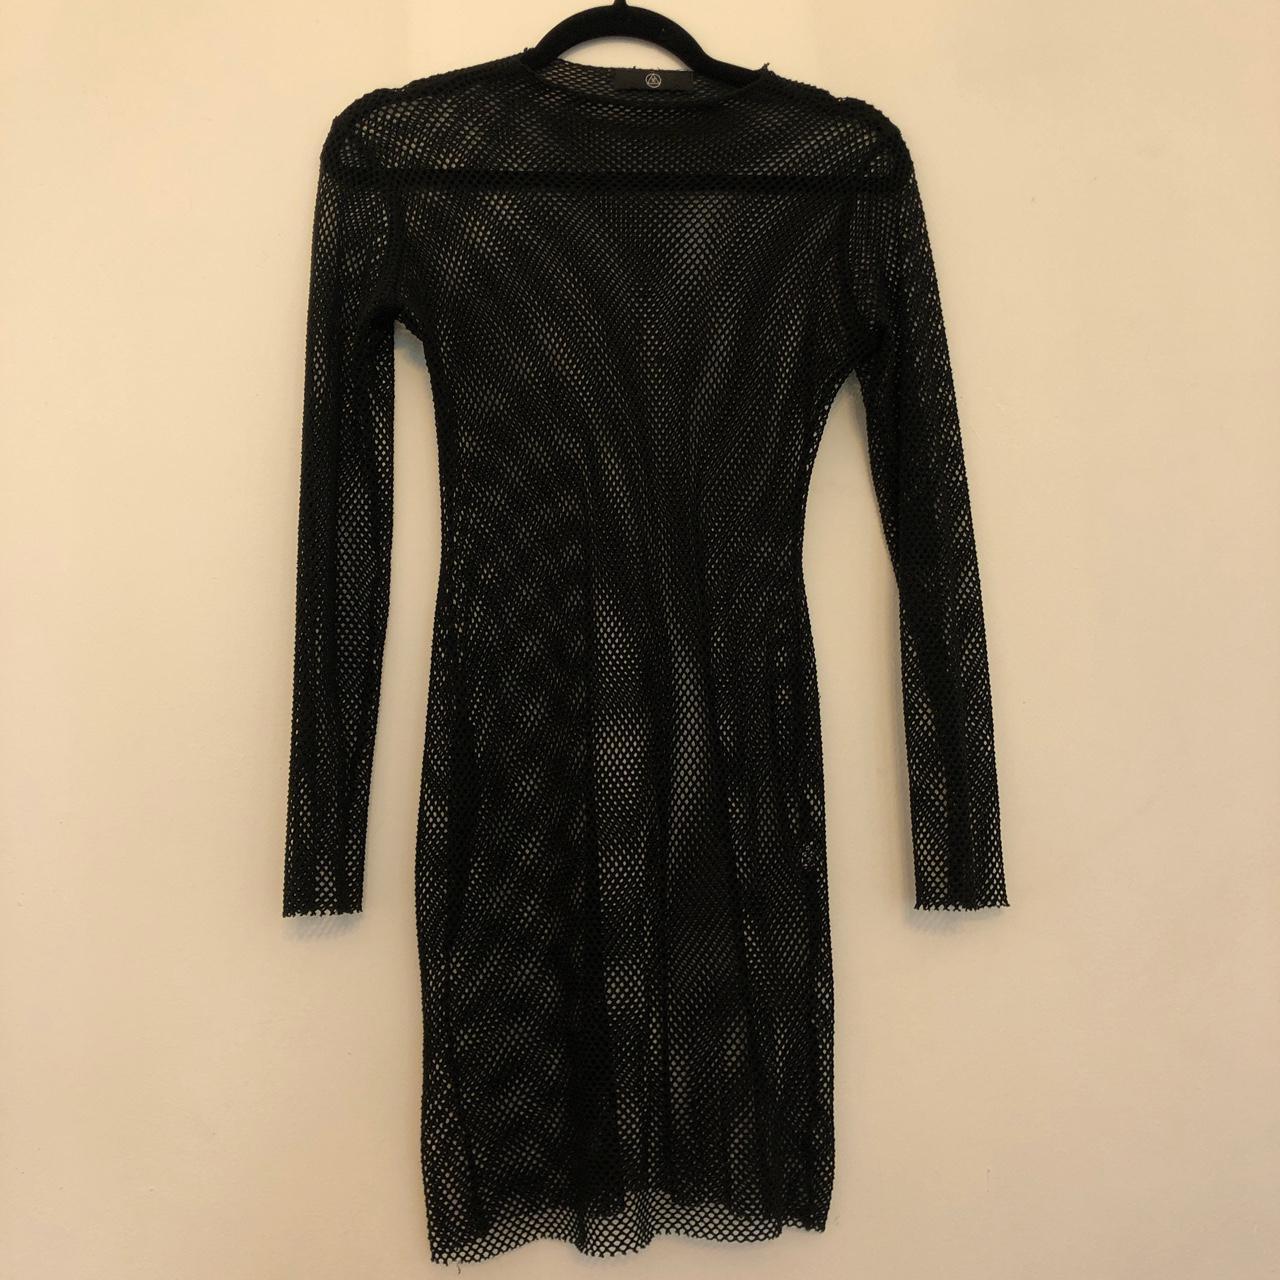 Missguided black fish net dress Size... - Depop